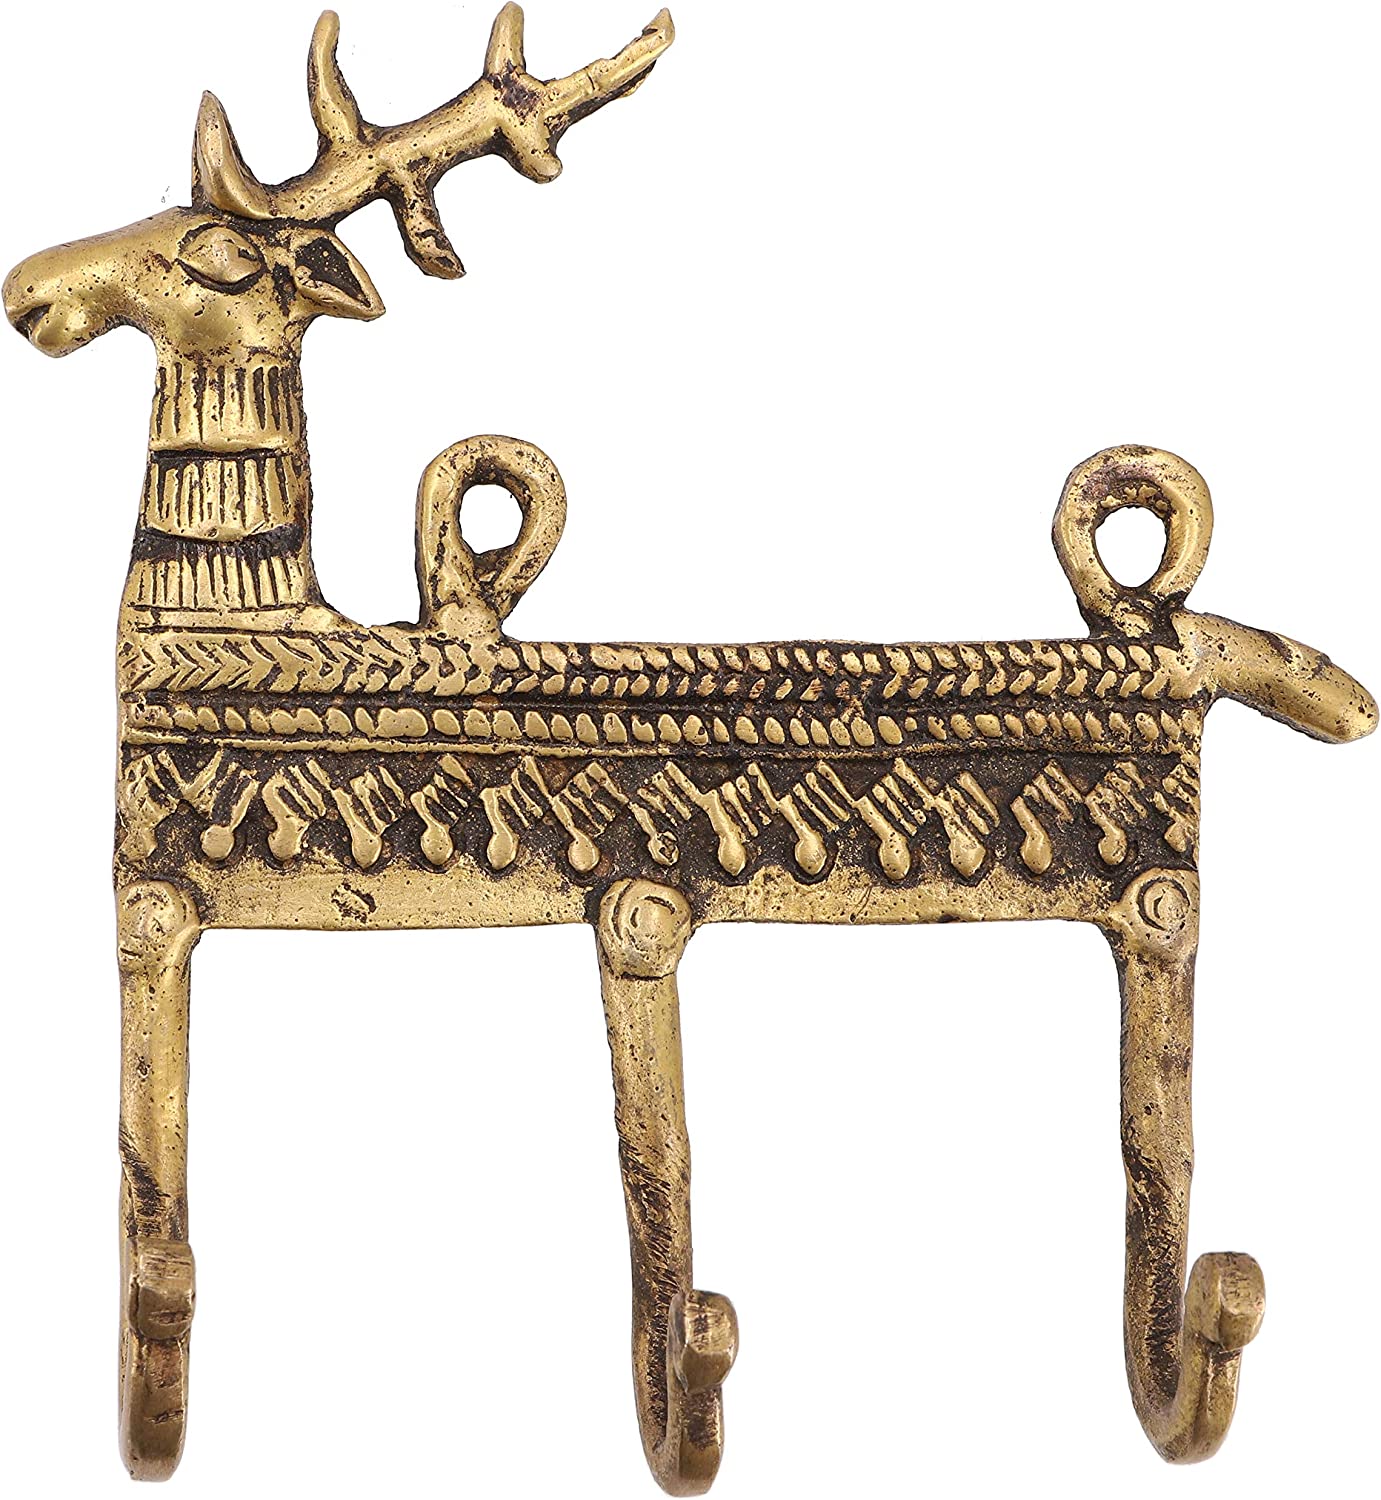 GURU SHOP Filigree Decorated 3 Brass Wall Hooks, Wall Coat Rack, Key Holder with Engraving – Deer / Brass, Gold, 13 x 13 x 3.5 cm, Wooden Wall Hook, Metal and Ceramic